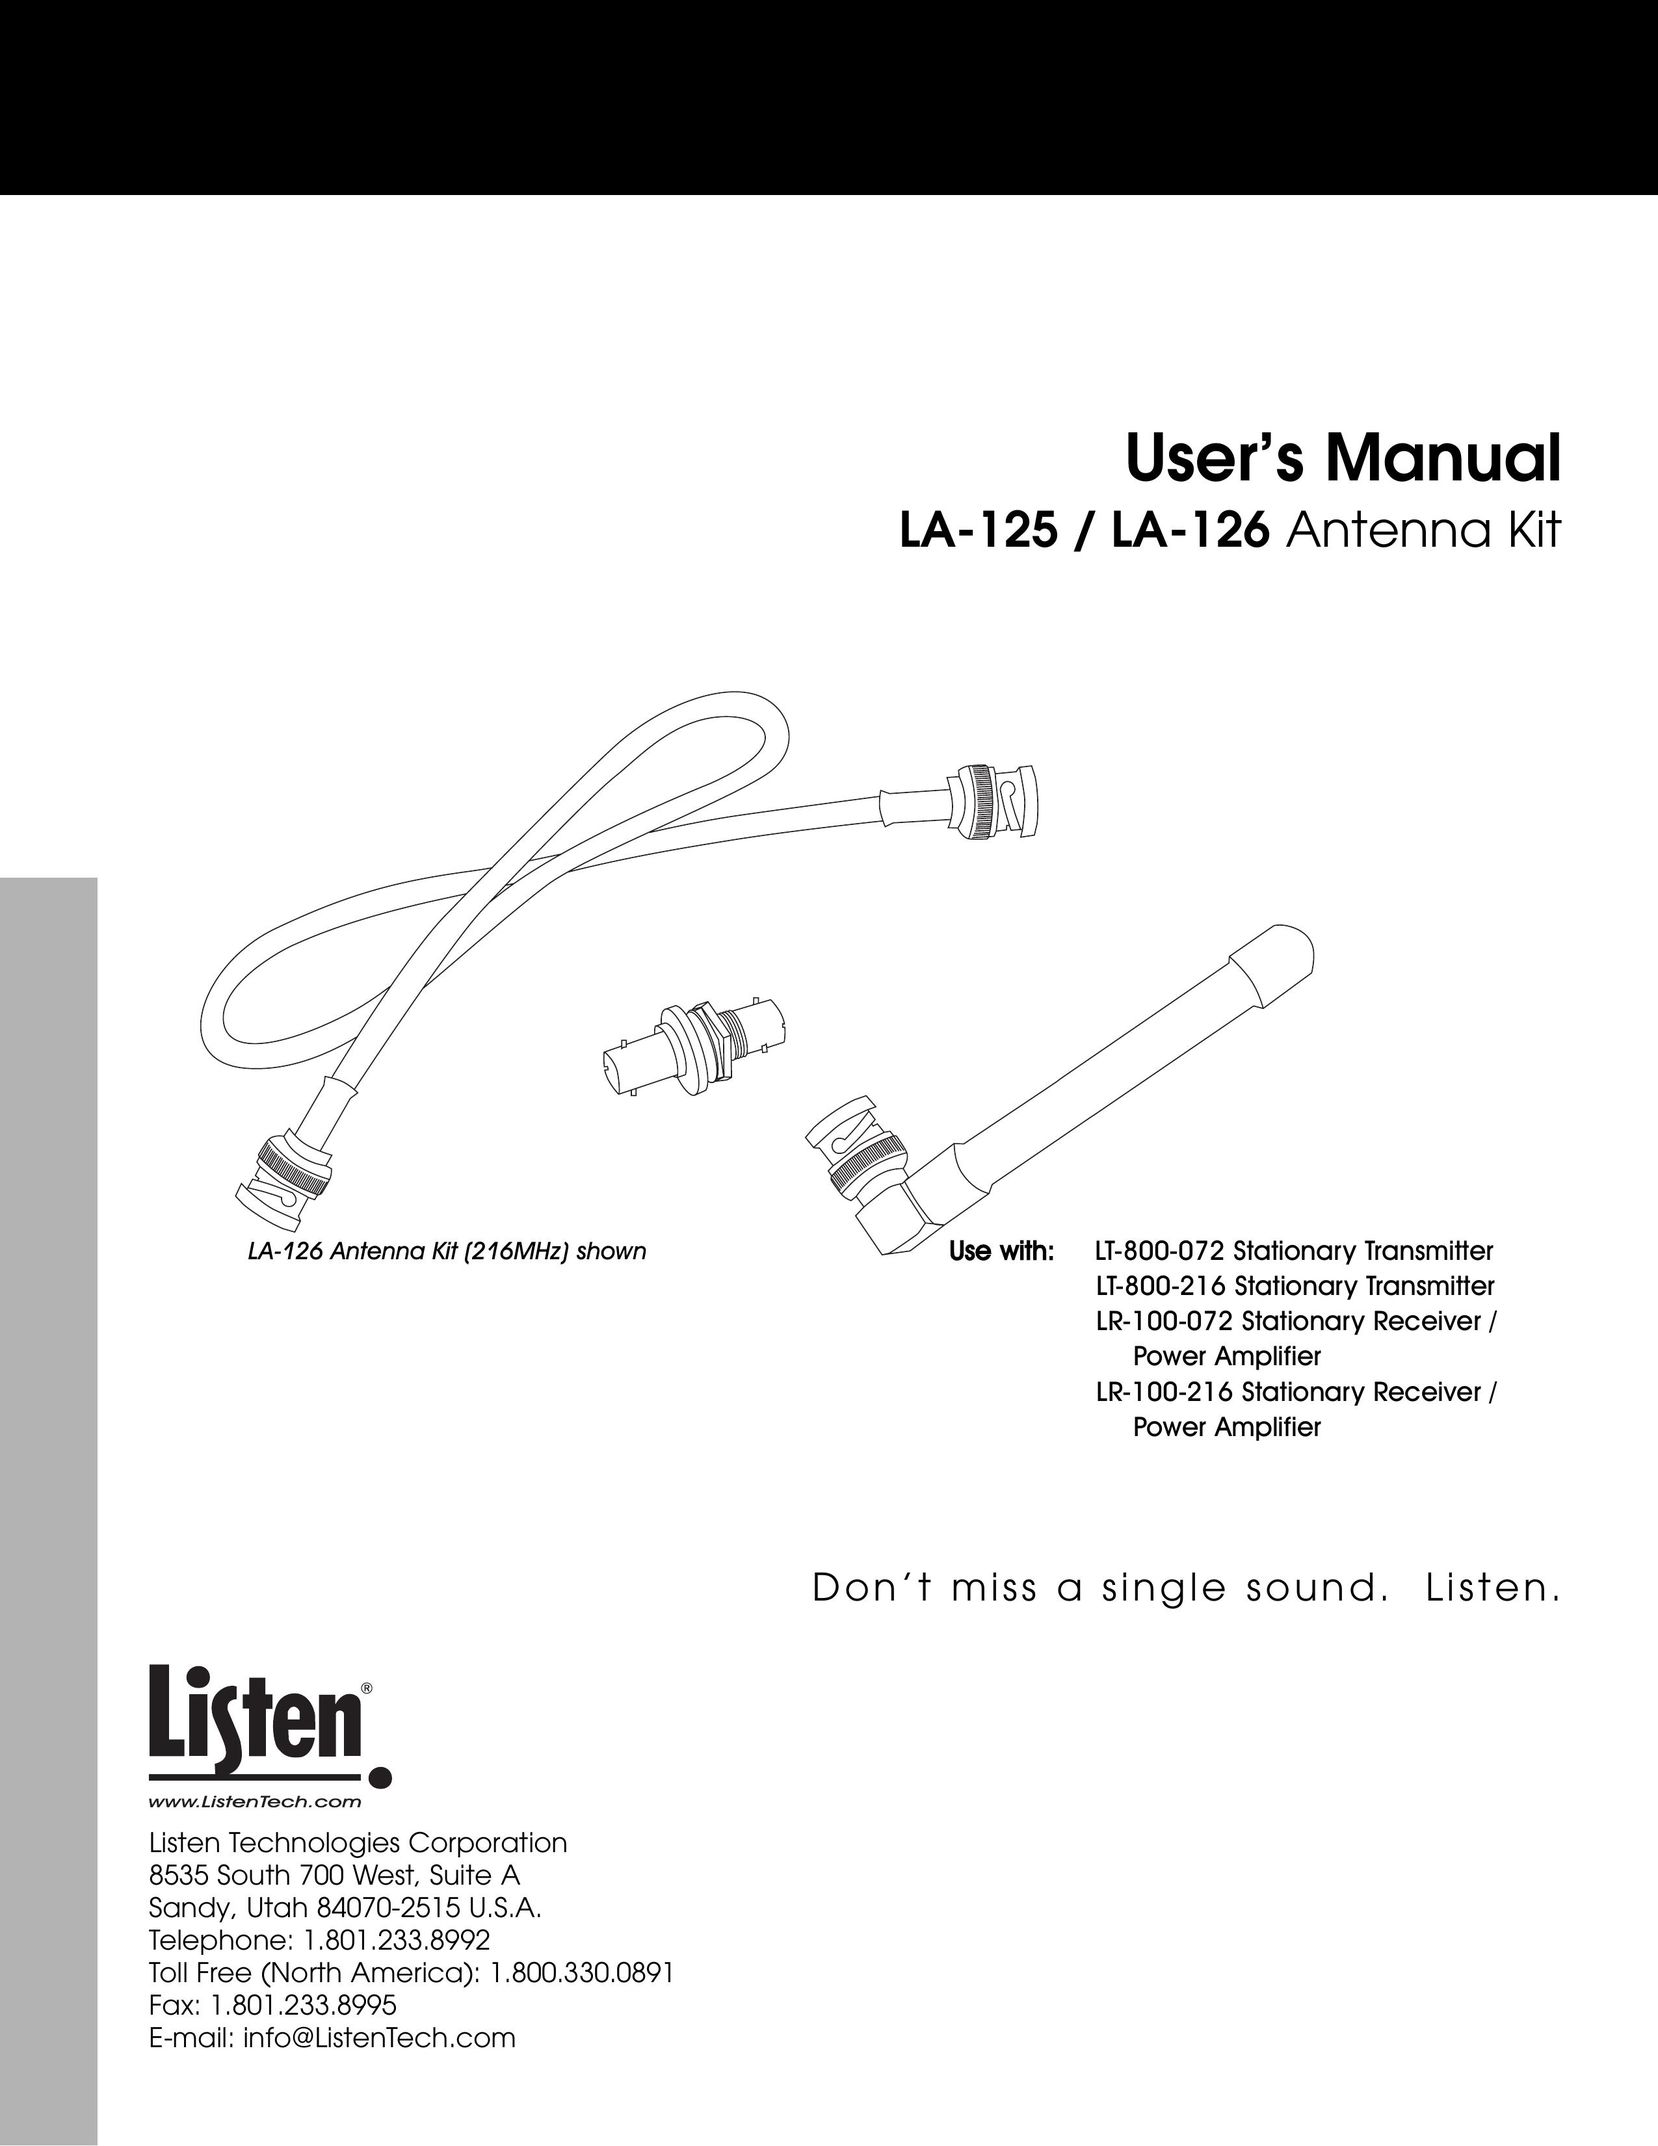 Listen Technologies LA-126 Stereo System User Manual